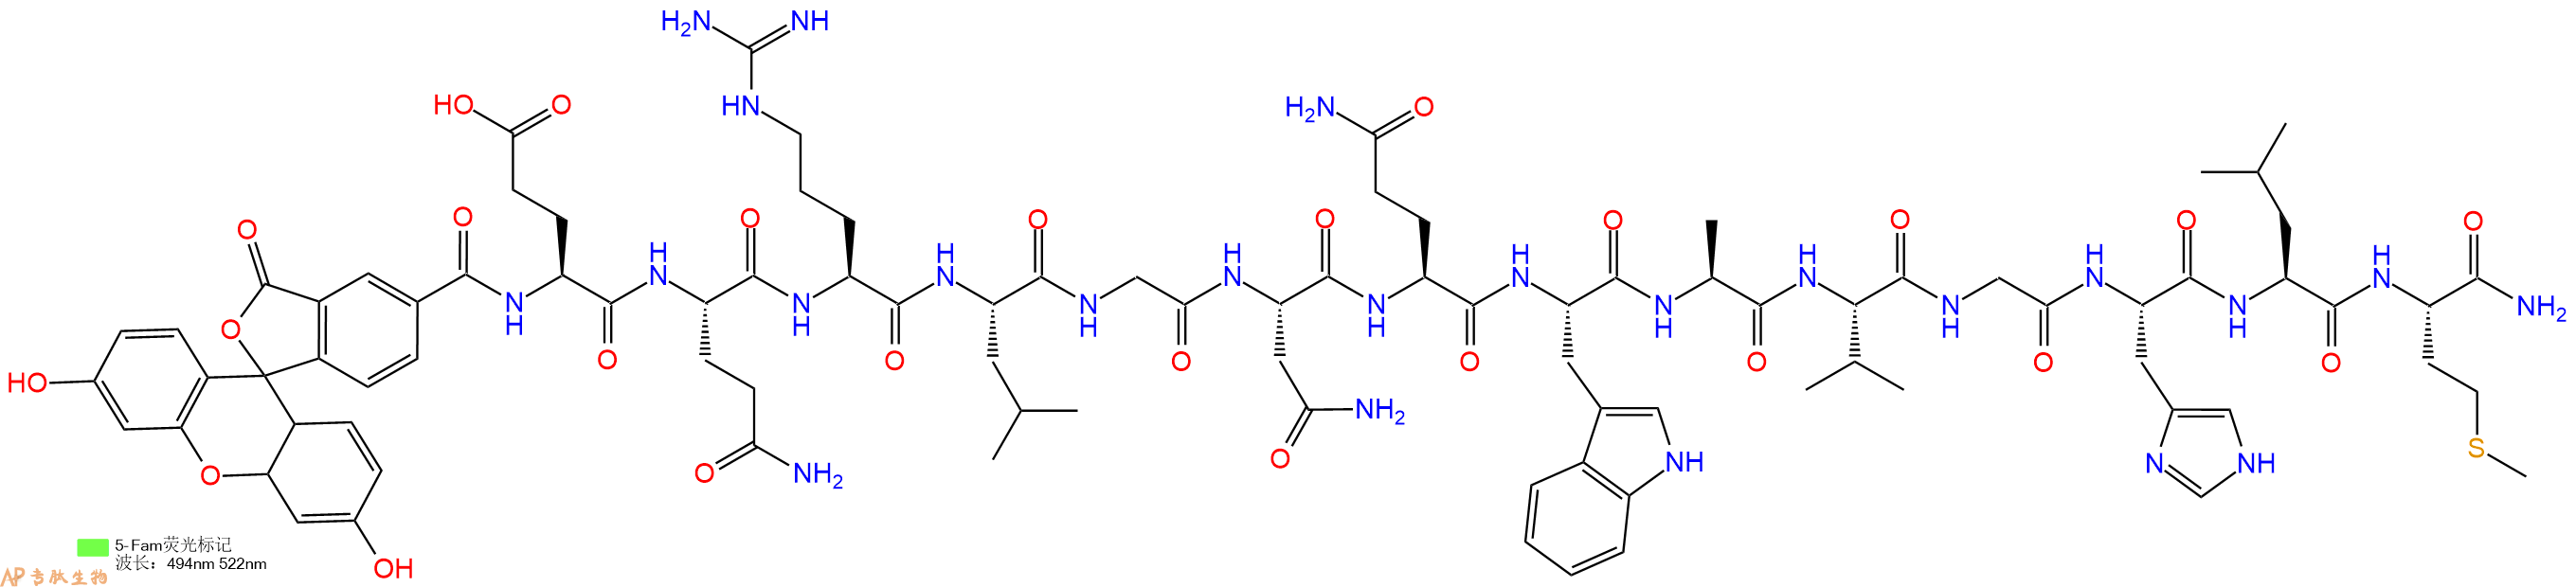 专肽生物产品Bombesin, FAM - labeled